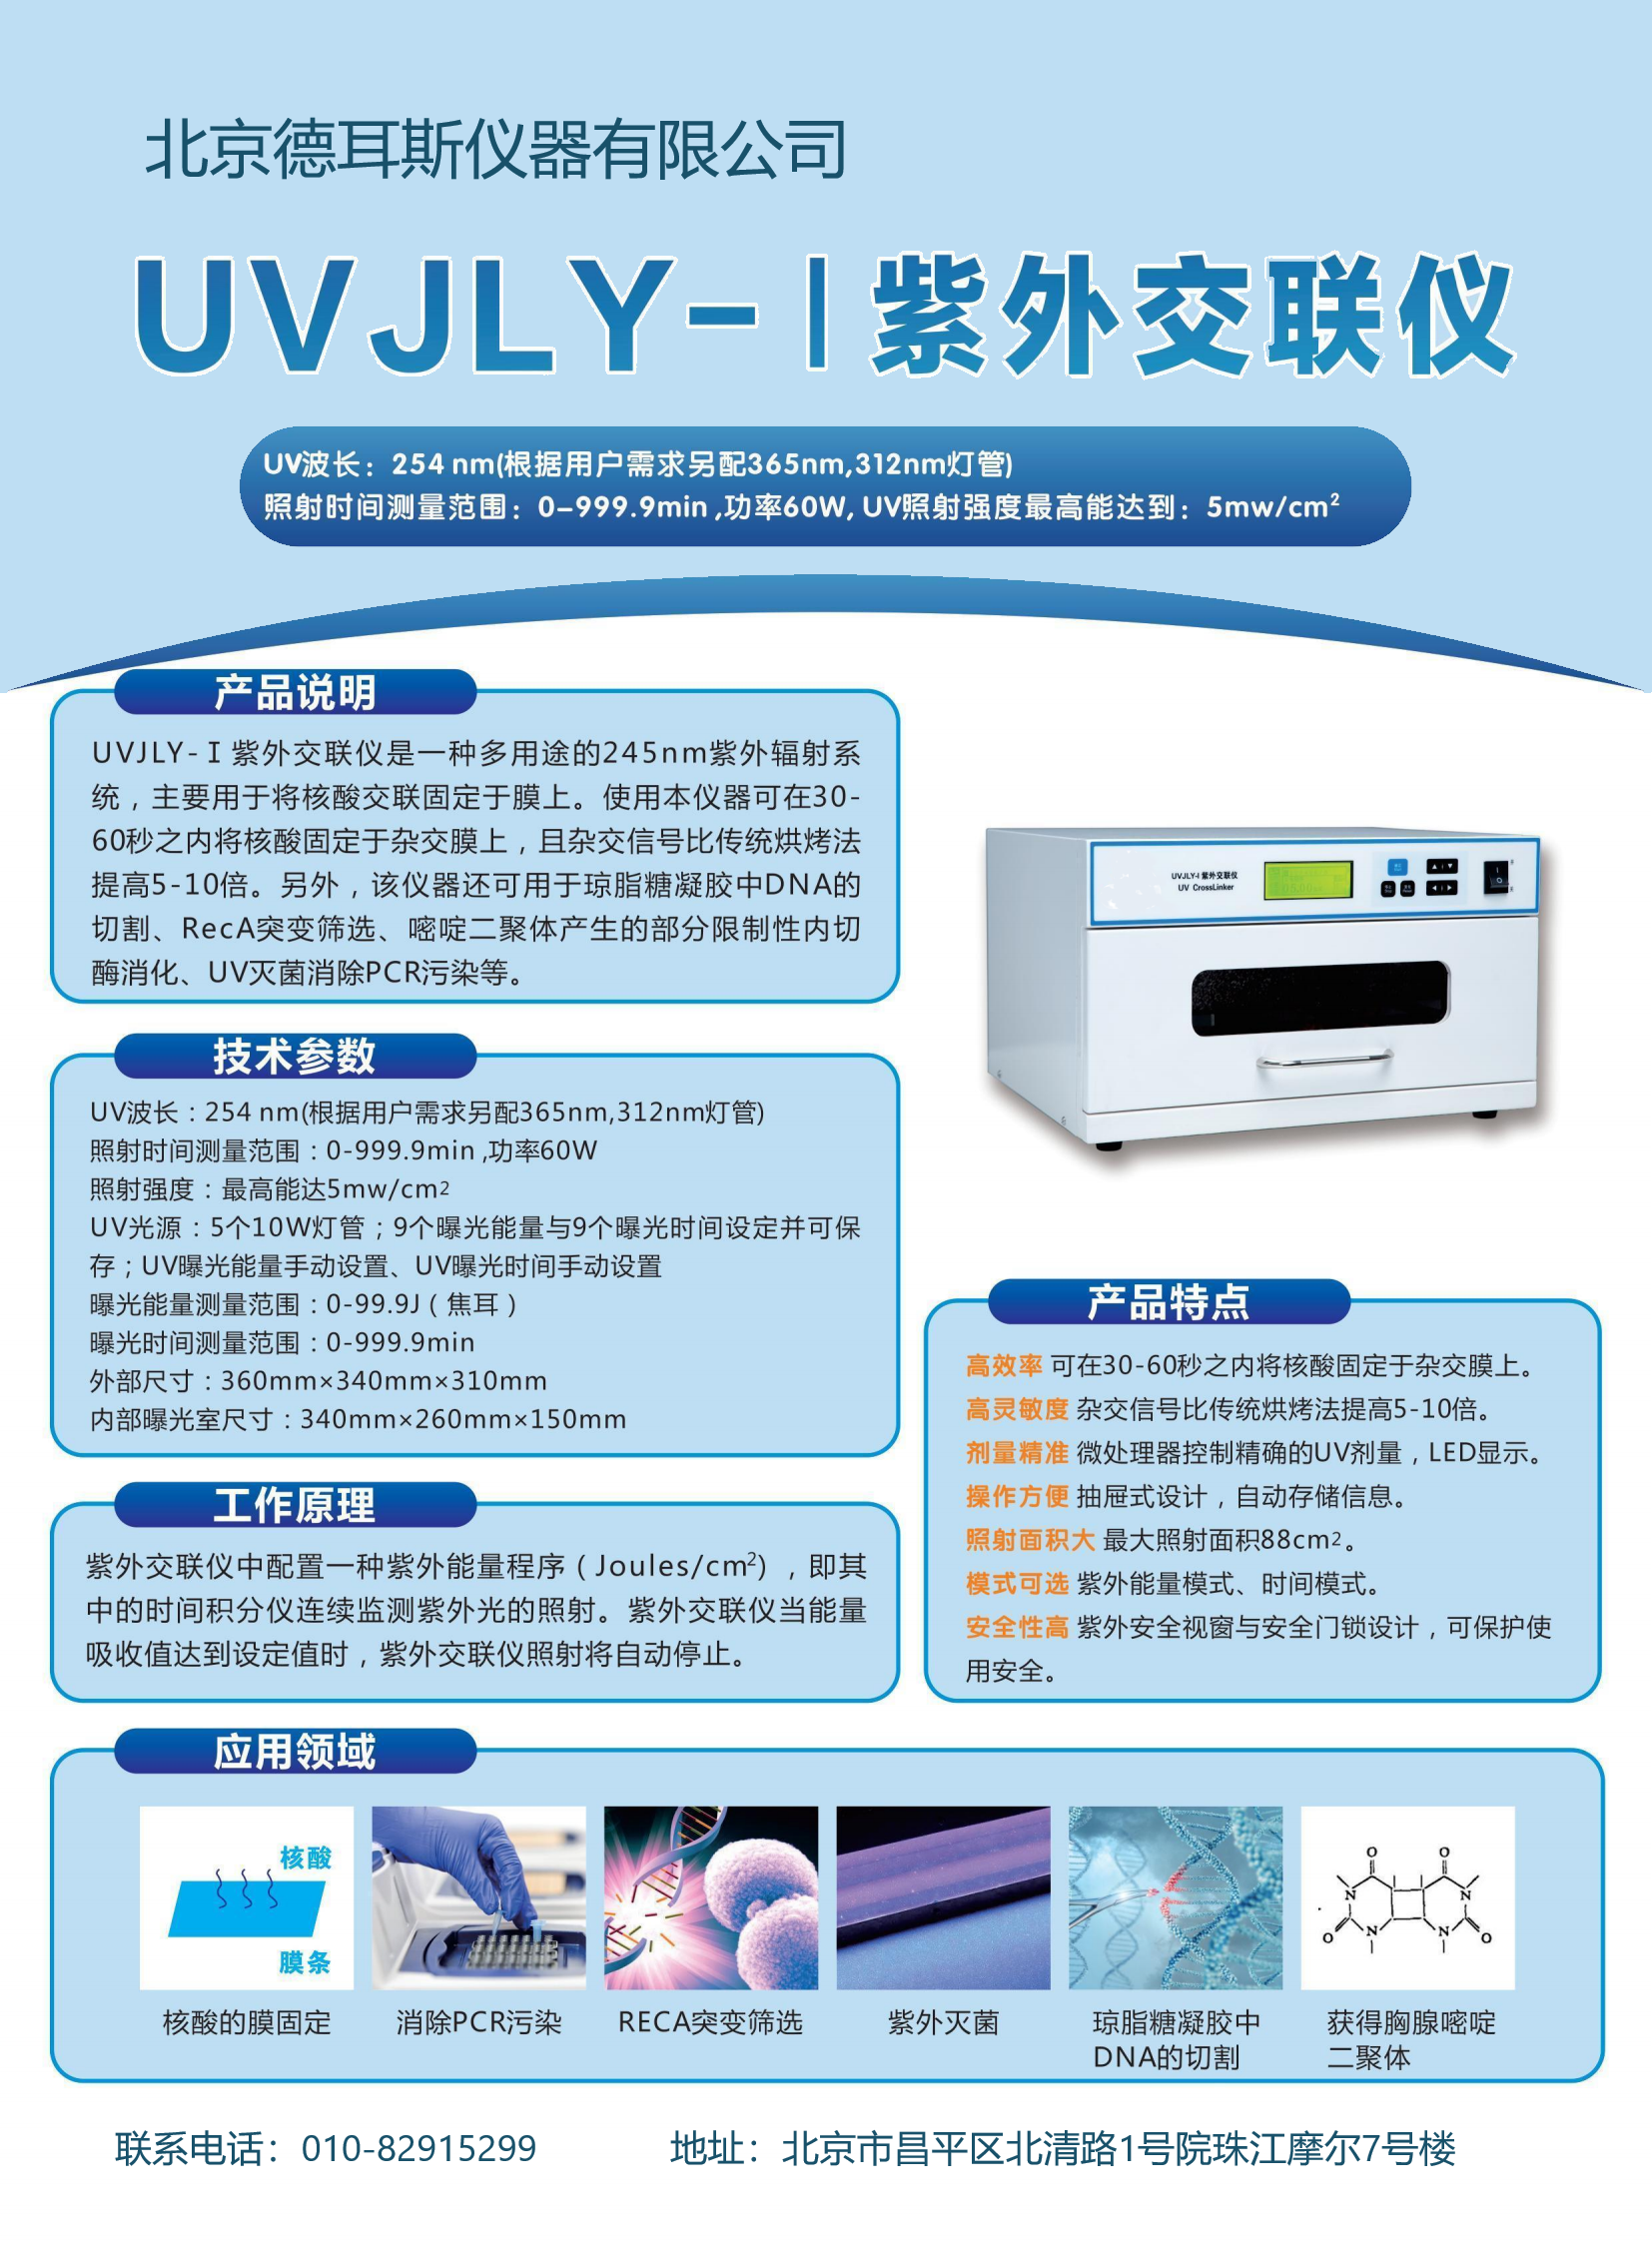 UVJLY-1紫外交联仪